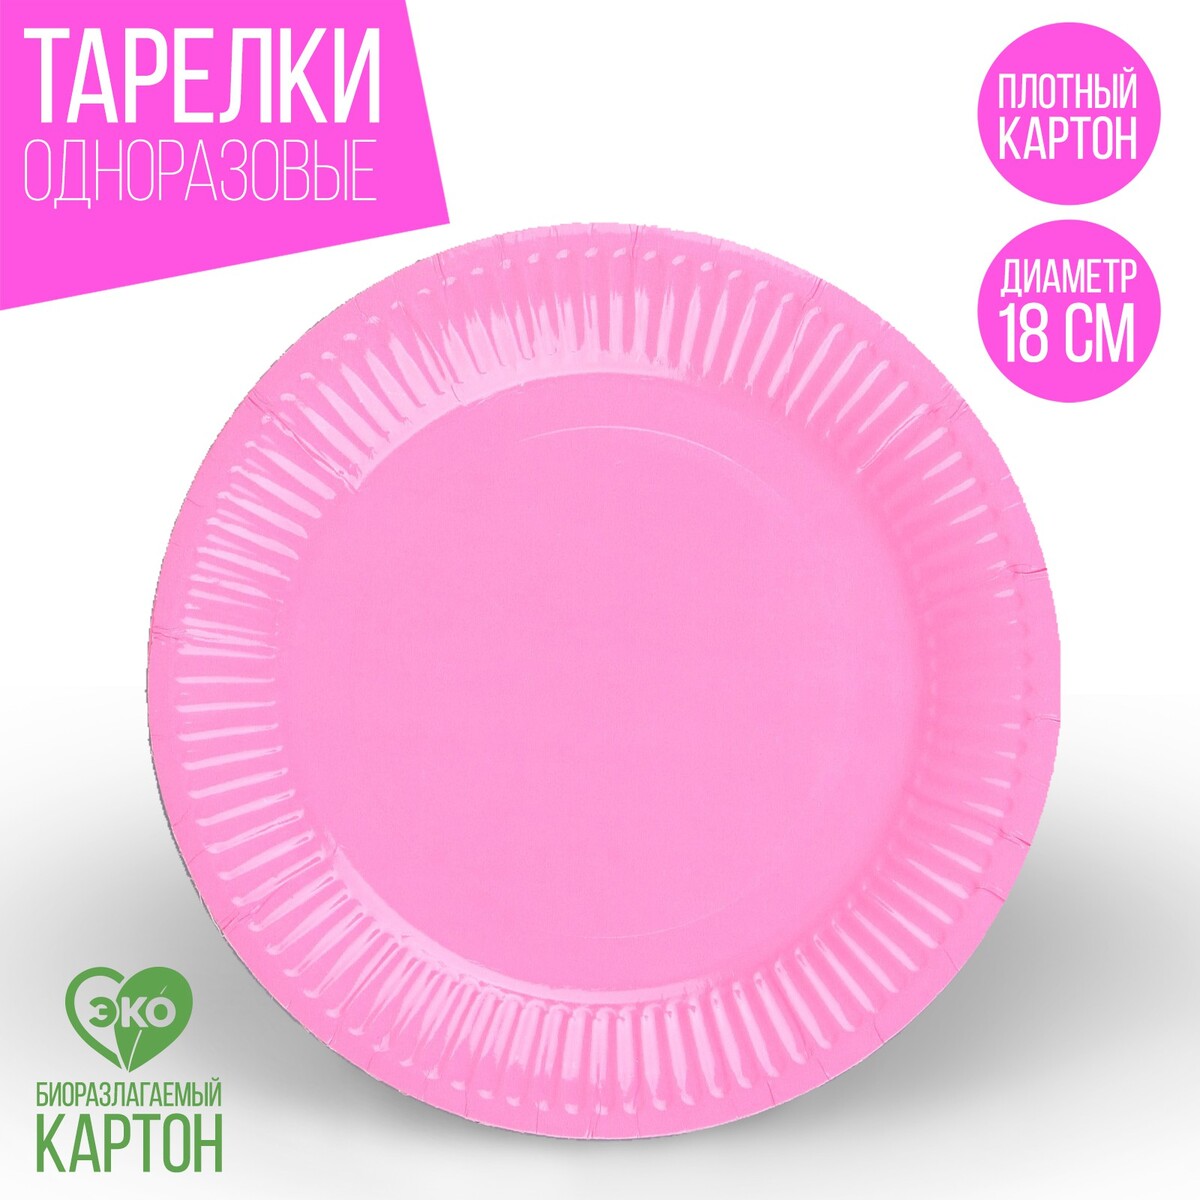 Тарелка одноразовая бумажная однотонная, цвет розовый 18 см, набор 10 штук тарелка одноразовая бумажная однотонная зеленый 18 см набор 10 штук